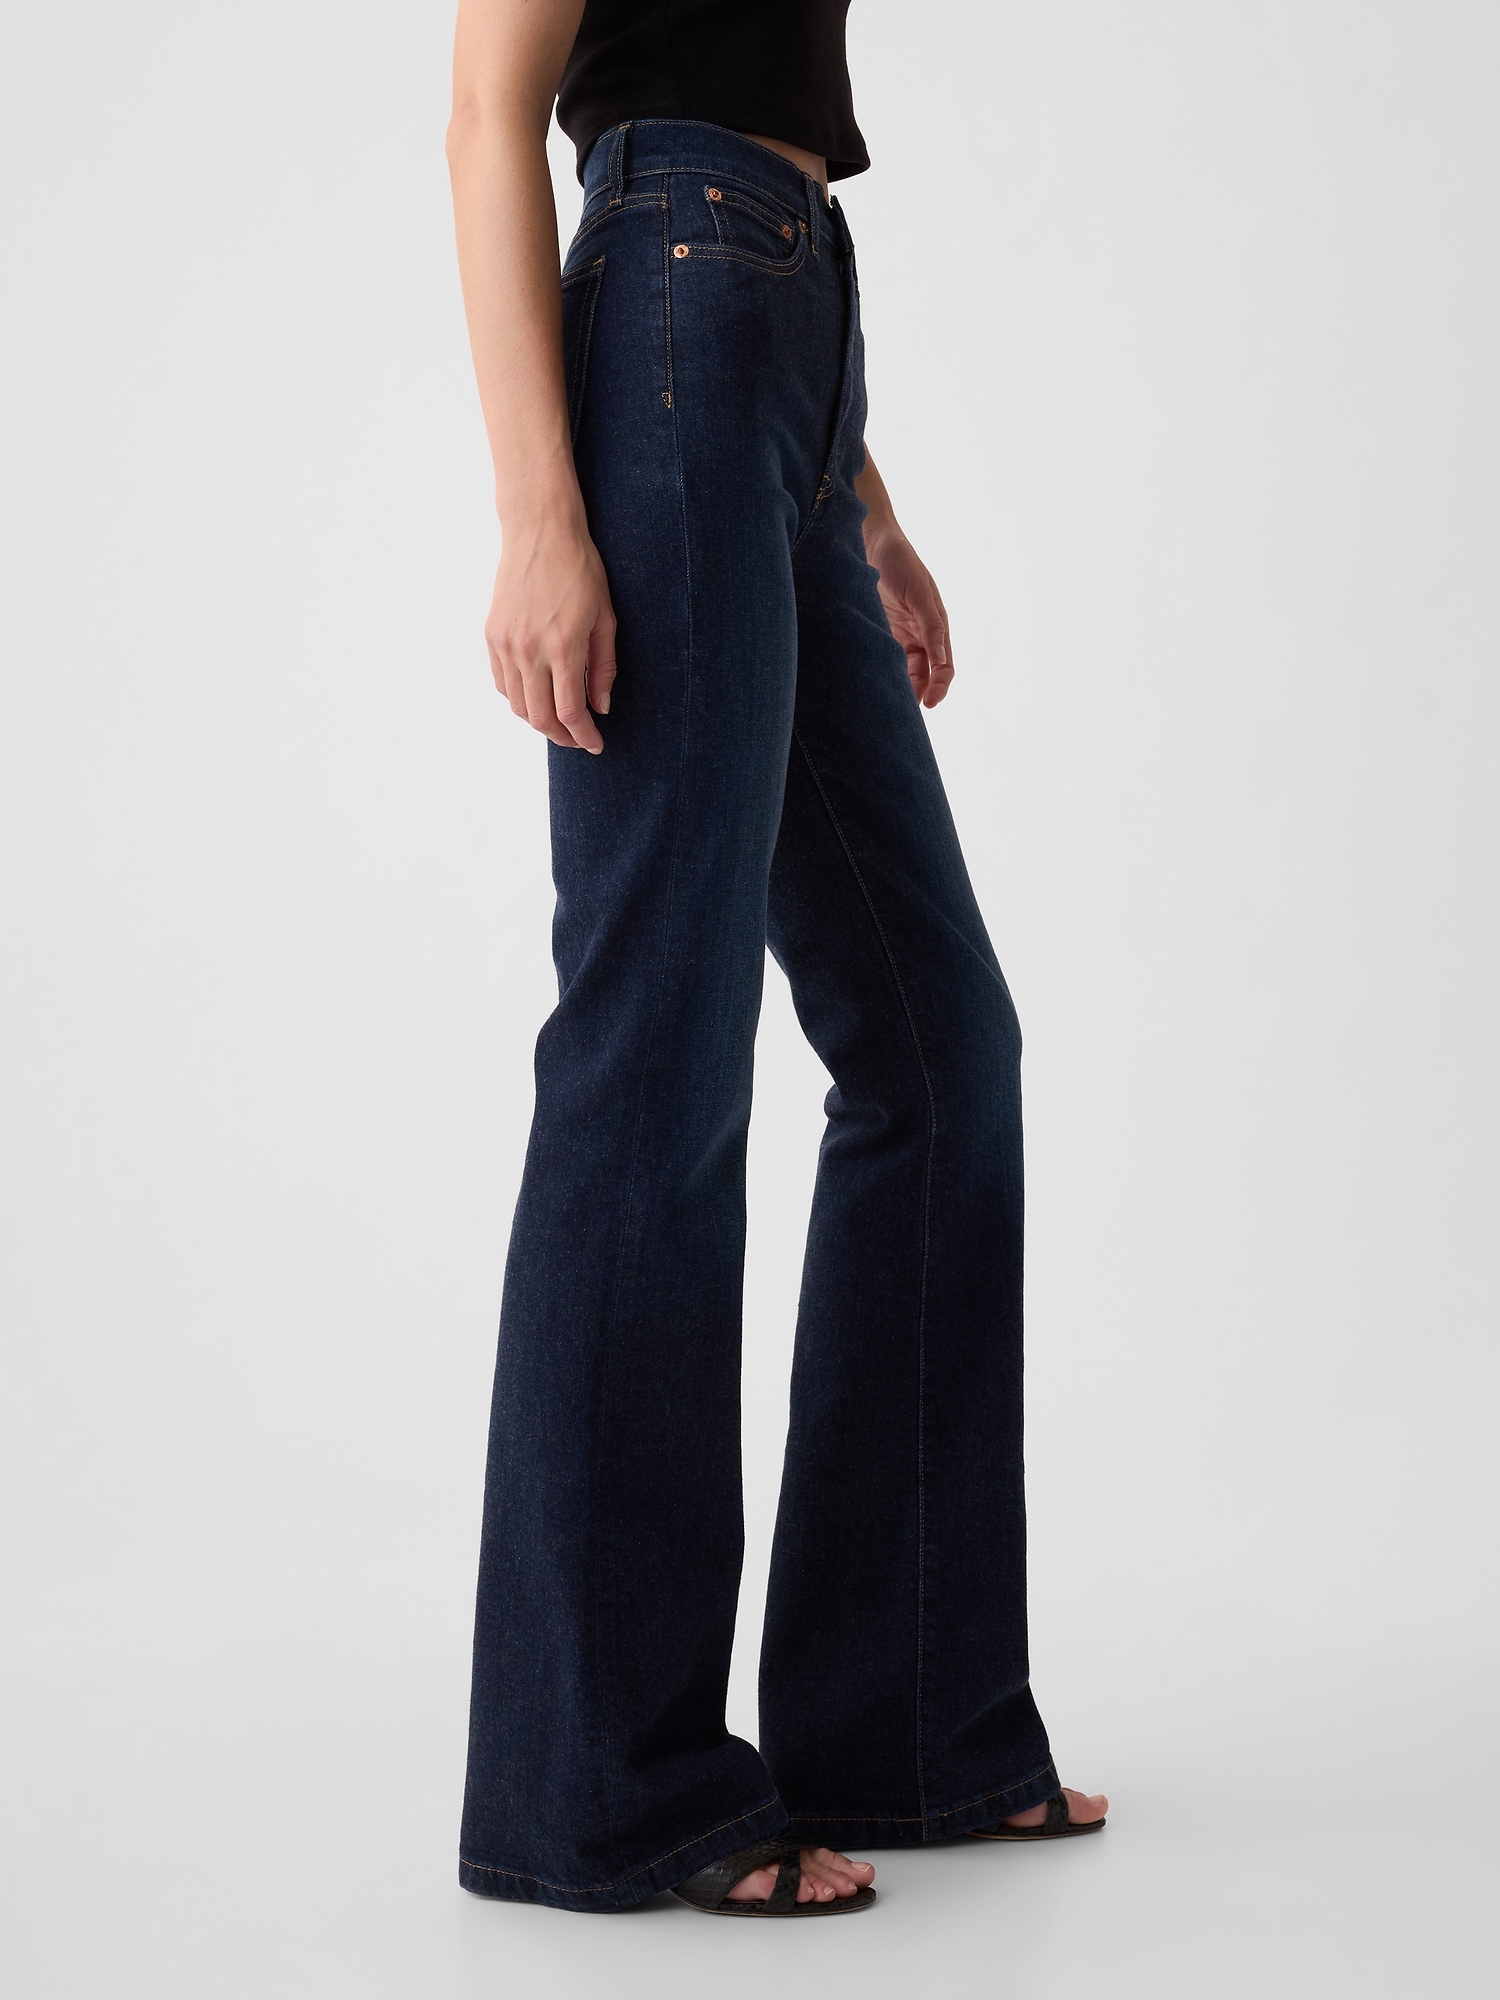 Women Vintage Bell Bottom Jeans Solid Color High Waisted Jeans Slim Fit Flared  Jeans 70s Flared Denim Pants 